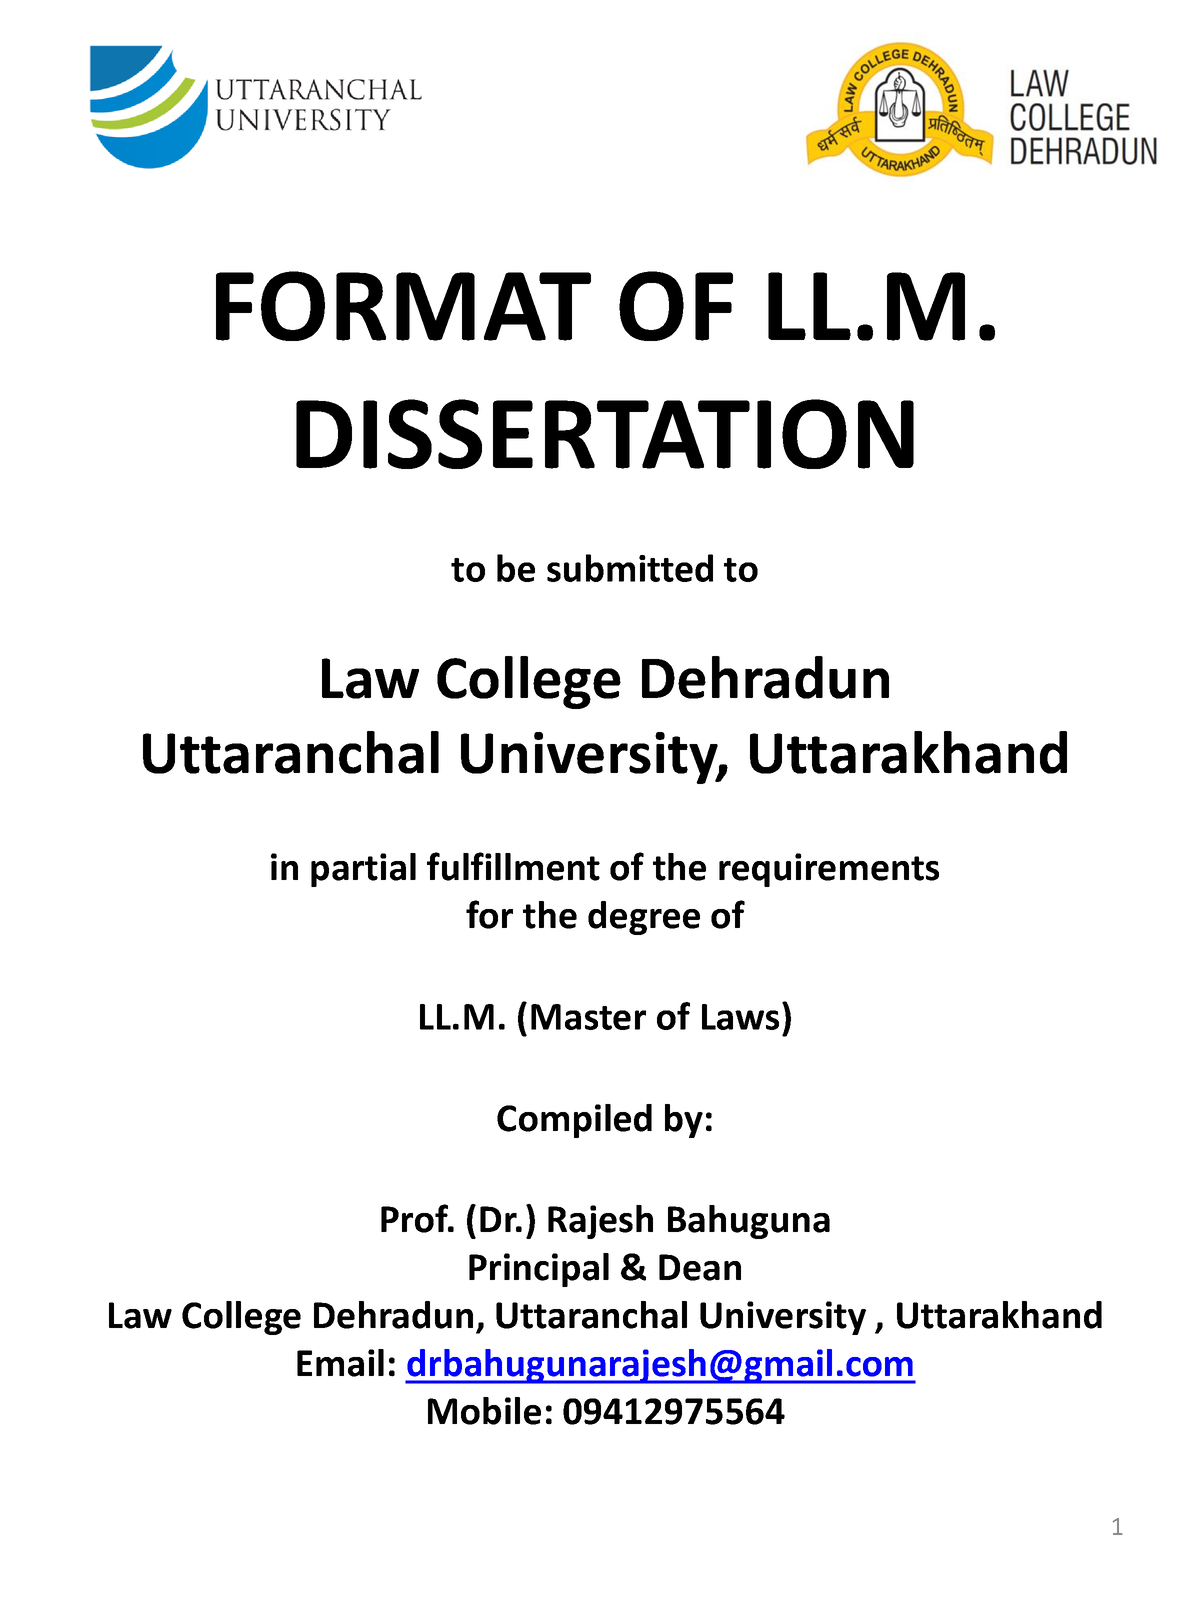 llm dissertation topics in administrative law